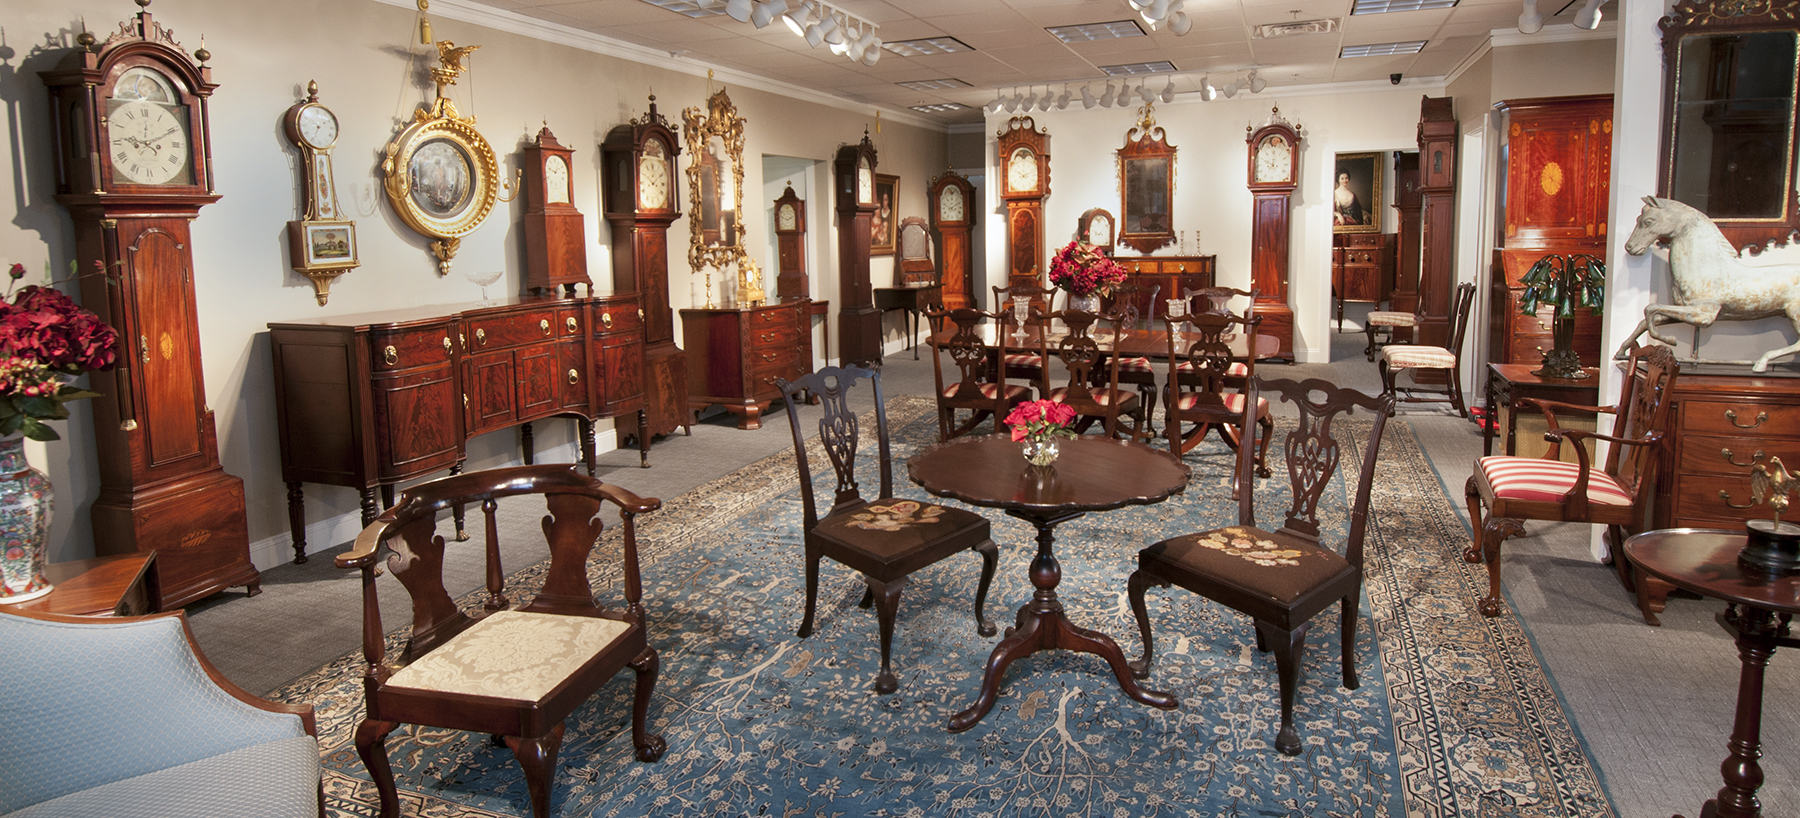 Gary Sullivans Antique Clocks And Furniture Blog Gallery Grand